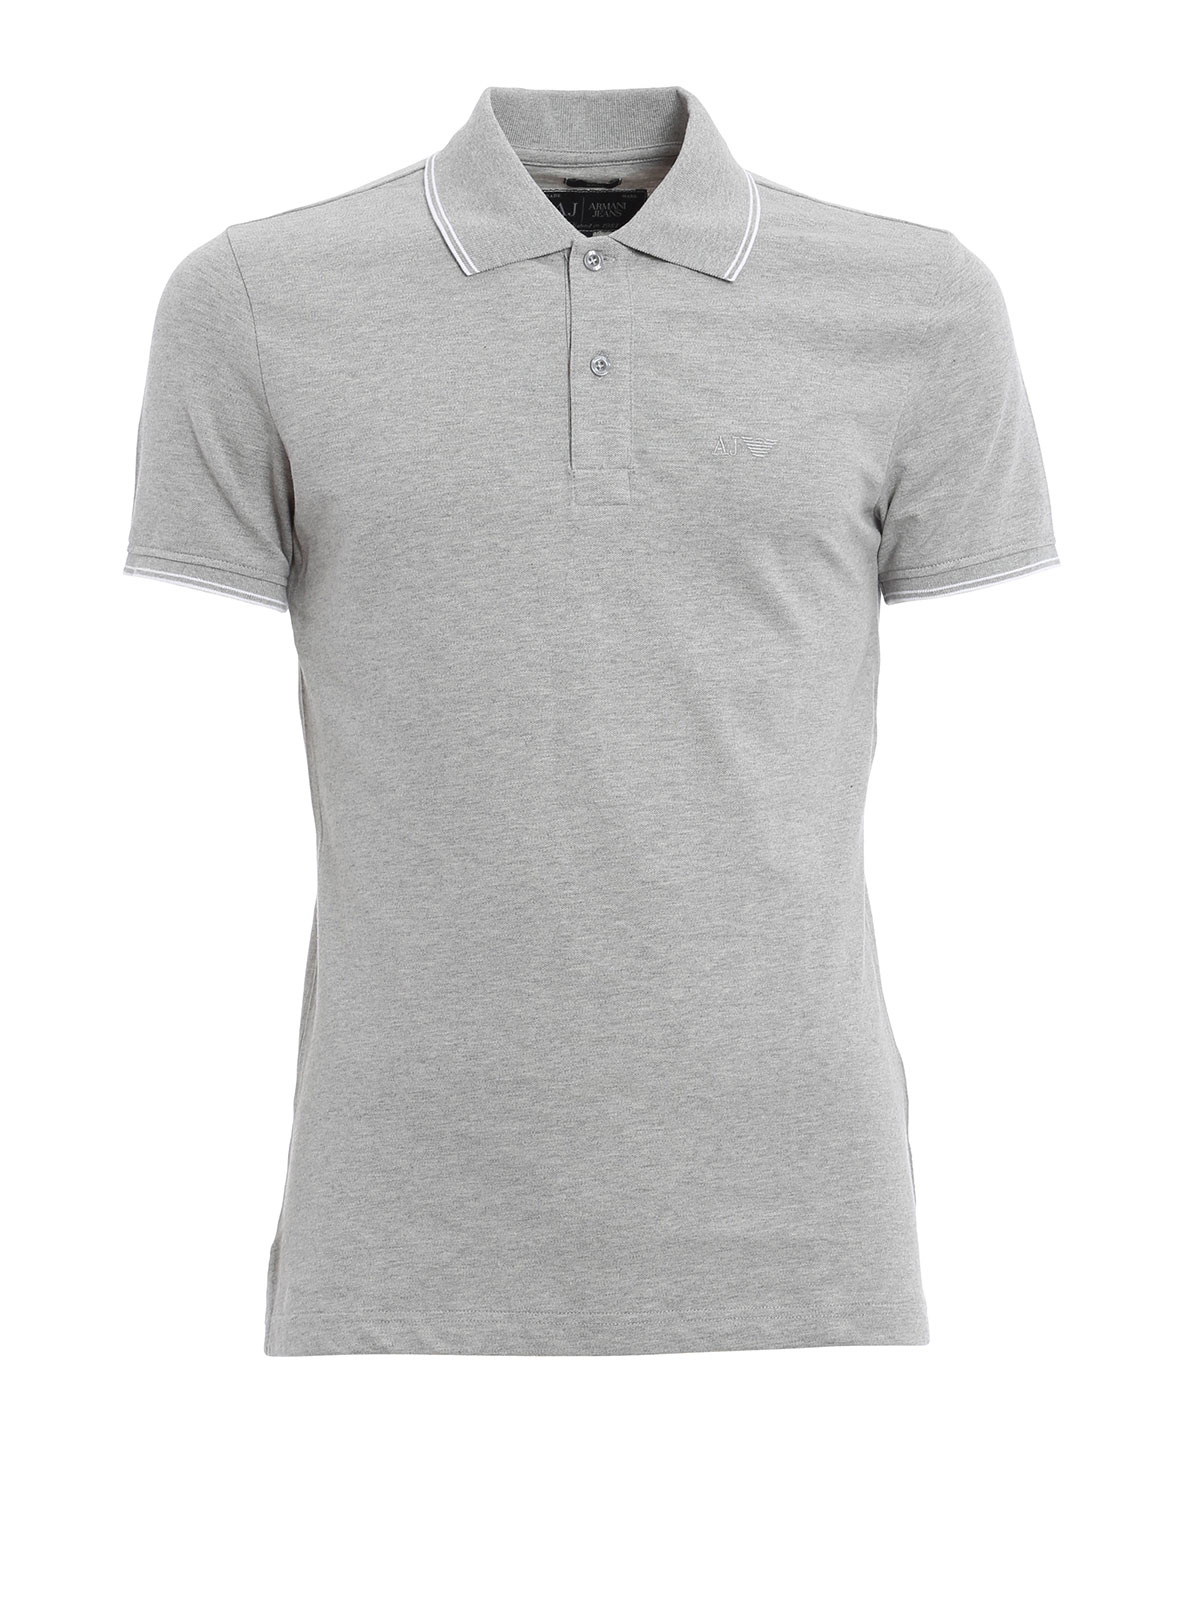 Polo shirts Armani Jeans - AJ Polo shirt - 06M30J2 | Shop online at THEBS